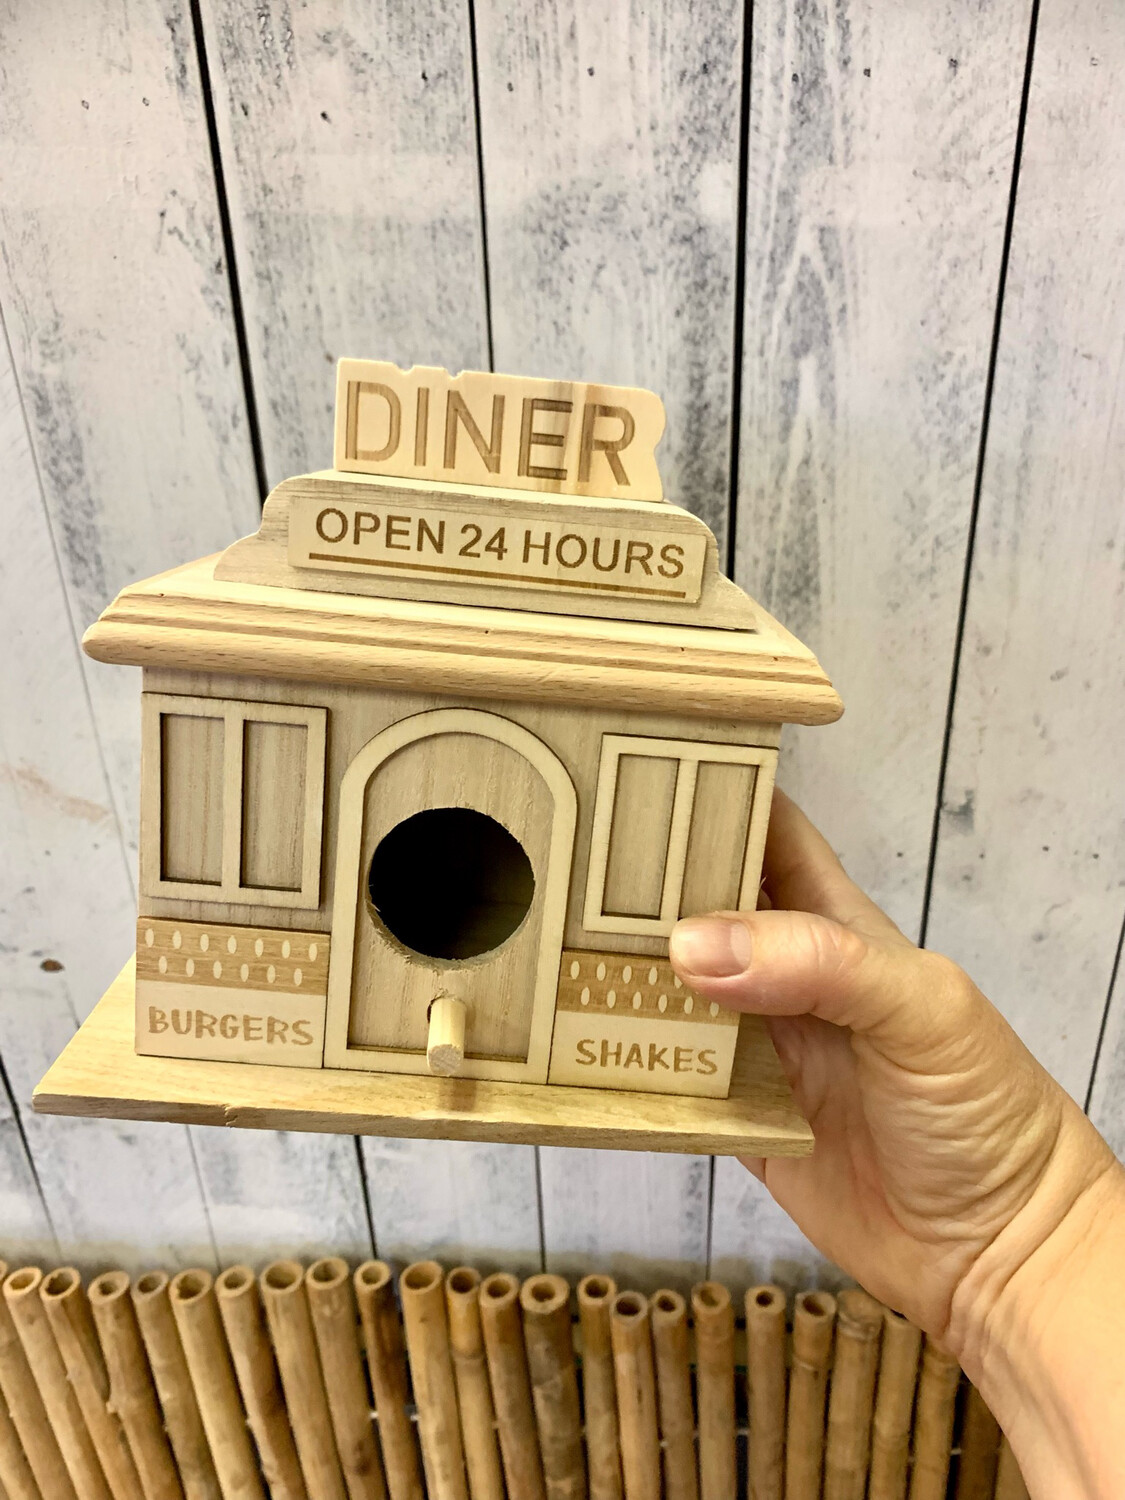 Wood Diner Birdhouse Painting Set - Craft Kit 